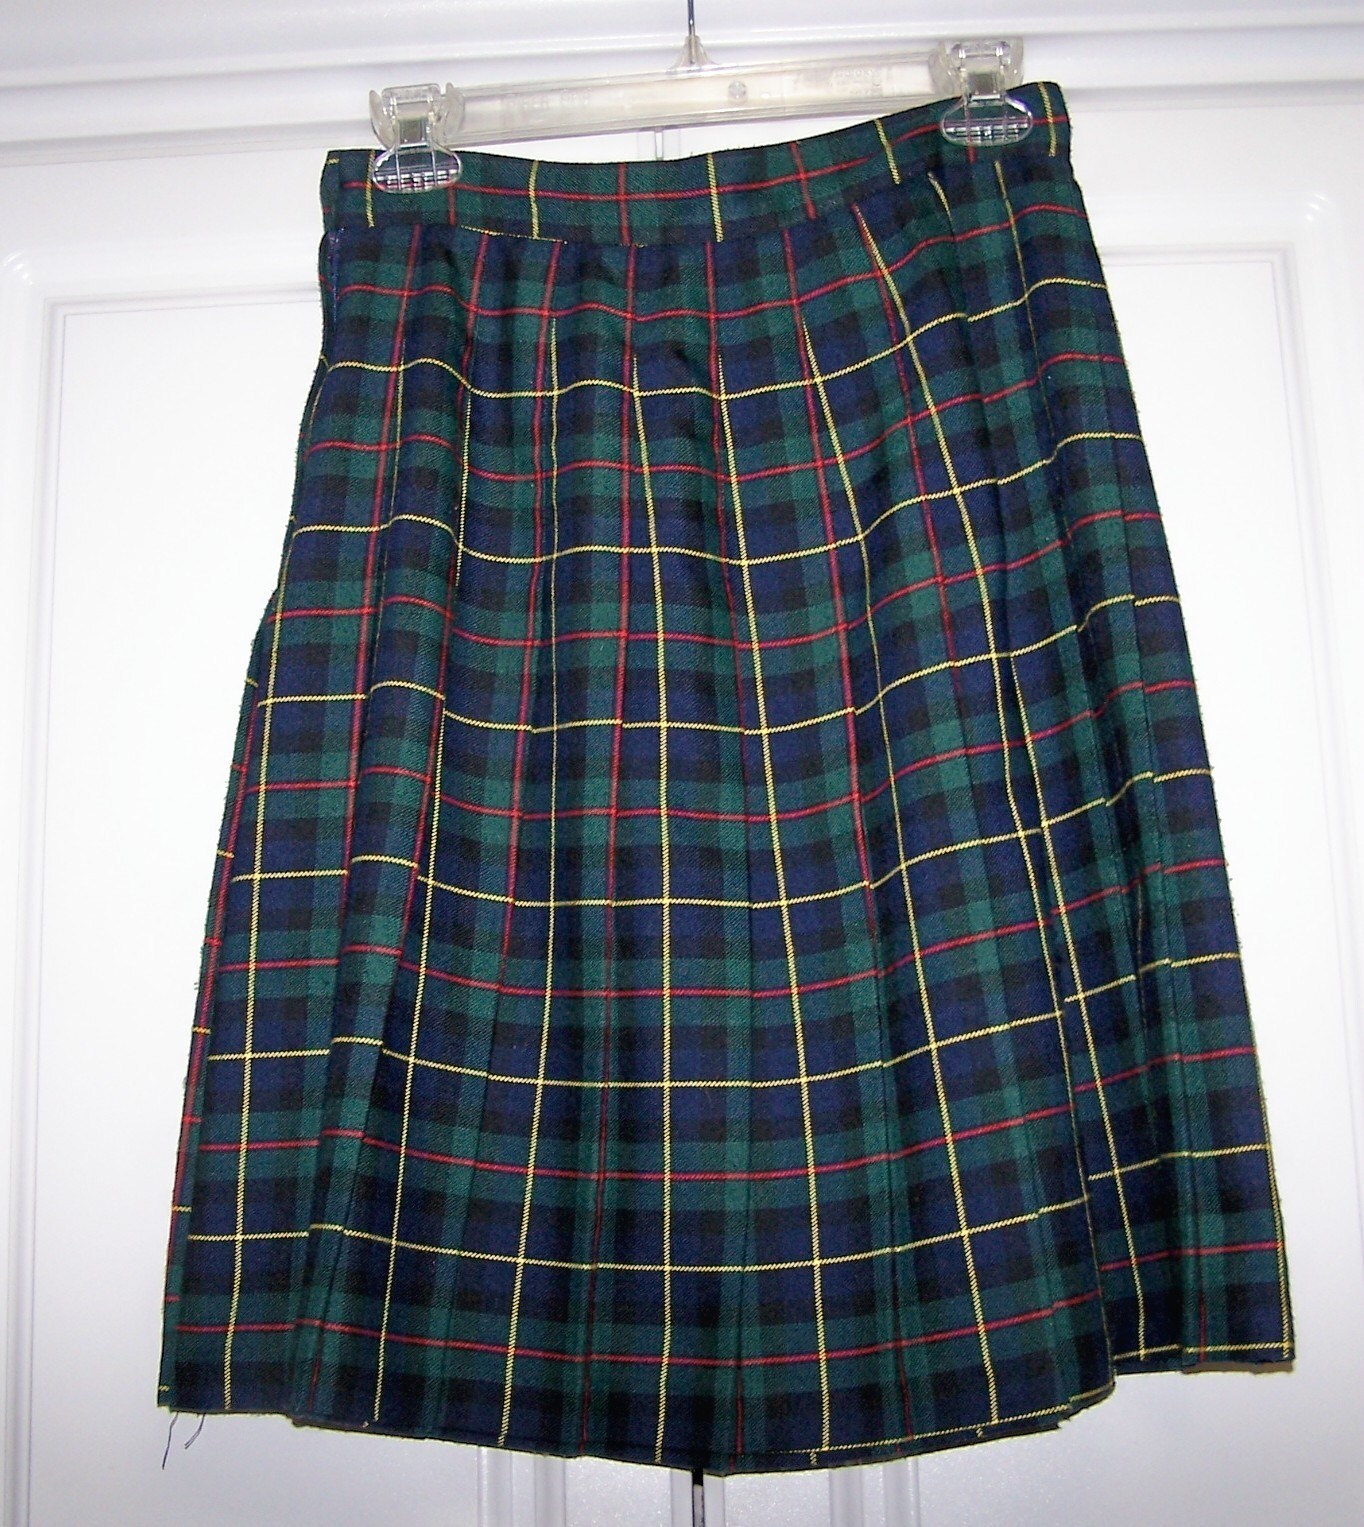 SALE Vintage Classic School Girl Plaid Pleated Skirt by gumbygirl